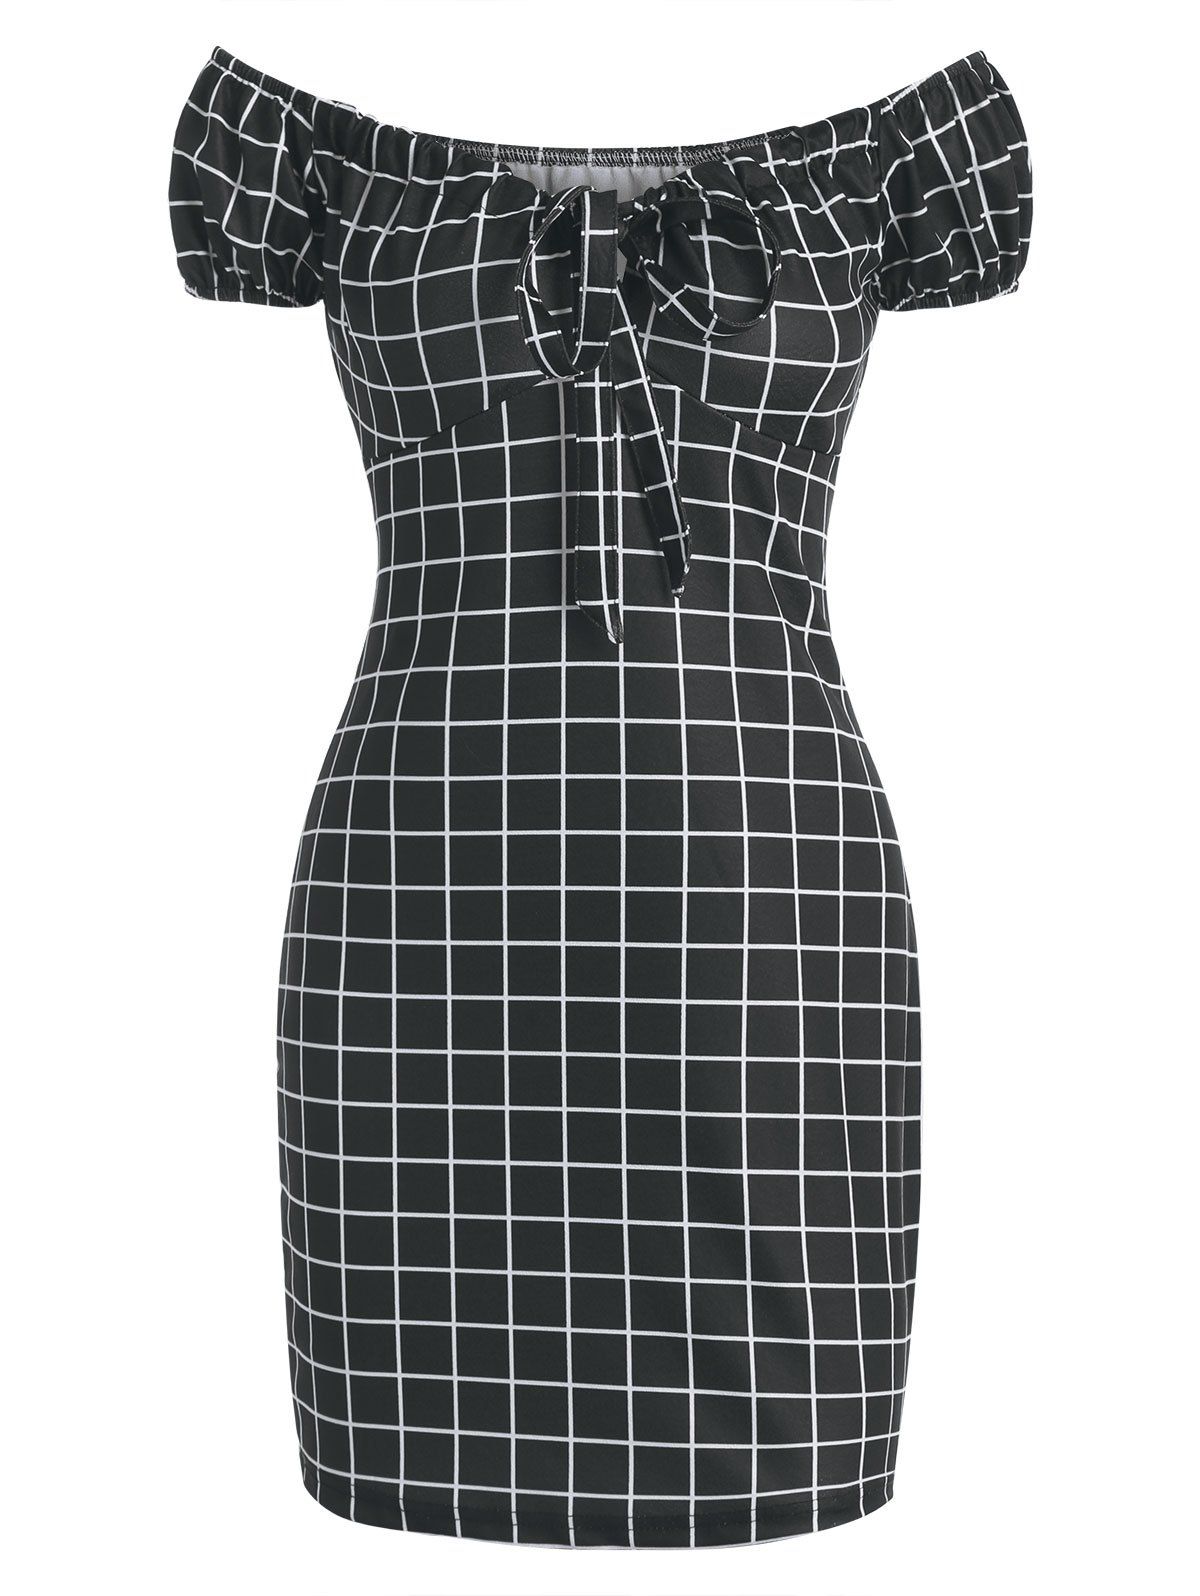 Plaid Grid Off Shoulder Bowknot Puff Sleeve Bodycon Mini Dress - BLACK 2XL